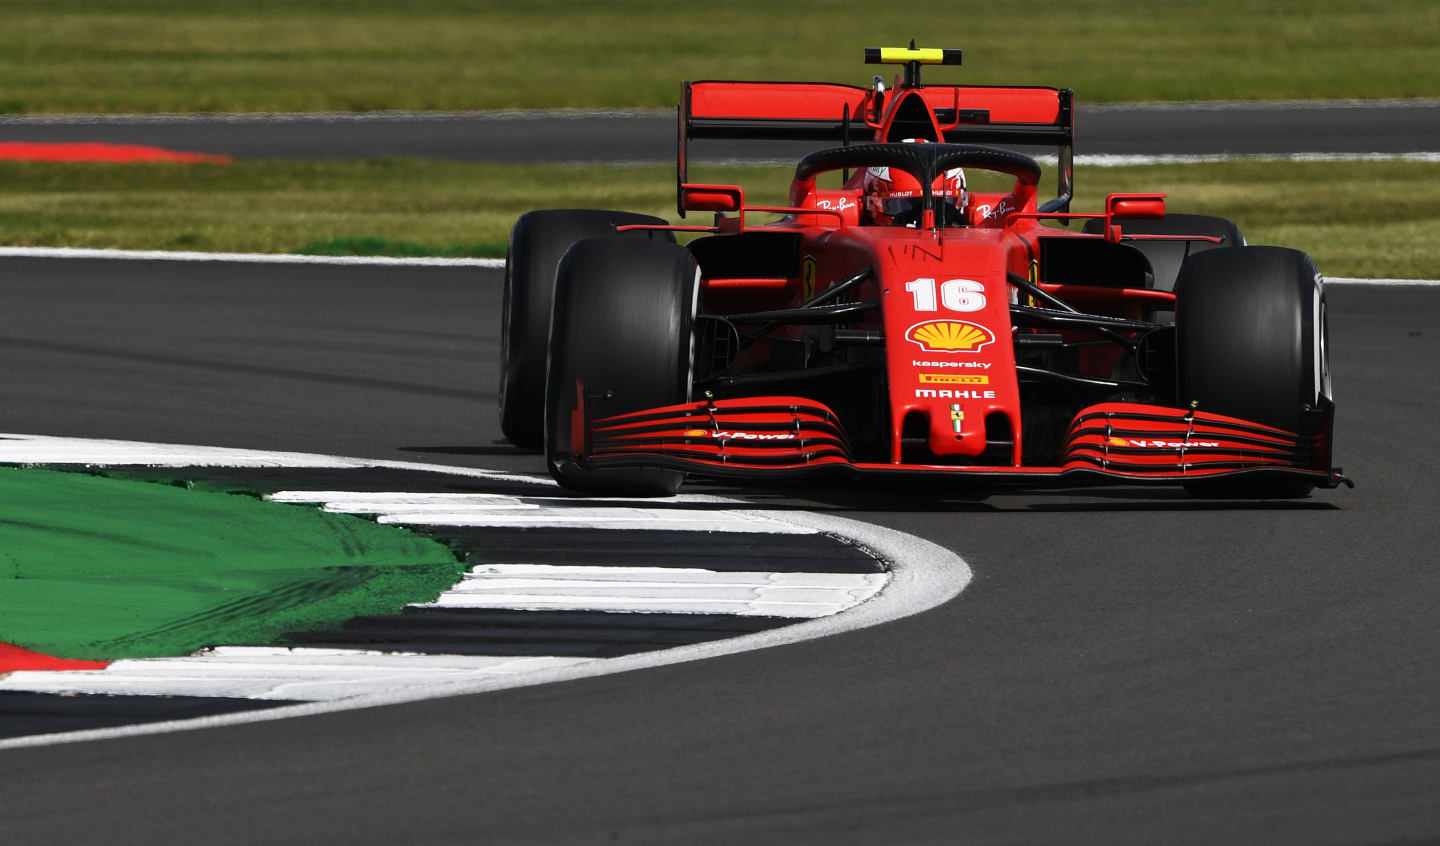 NORTHAMPTON, ENGLAND - AUGUST 02: Charles Leclerc of Monaco driving the (16) Scuderia Ferrari